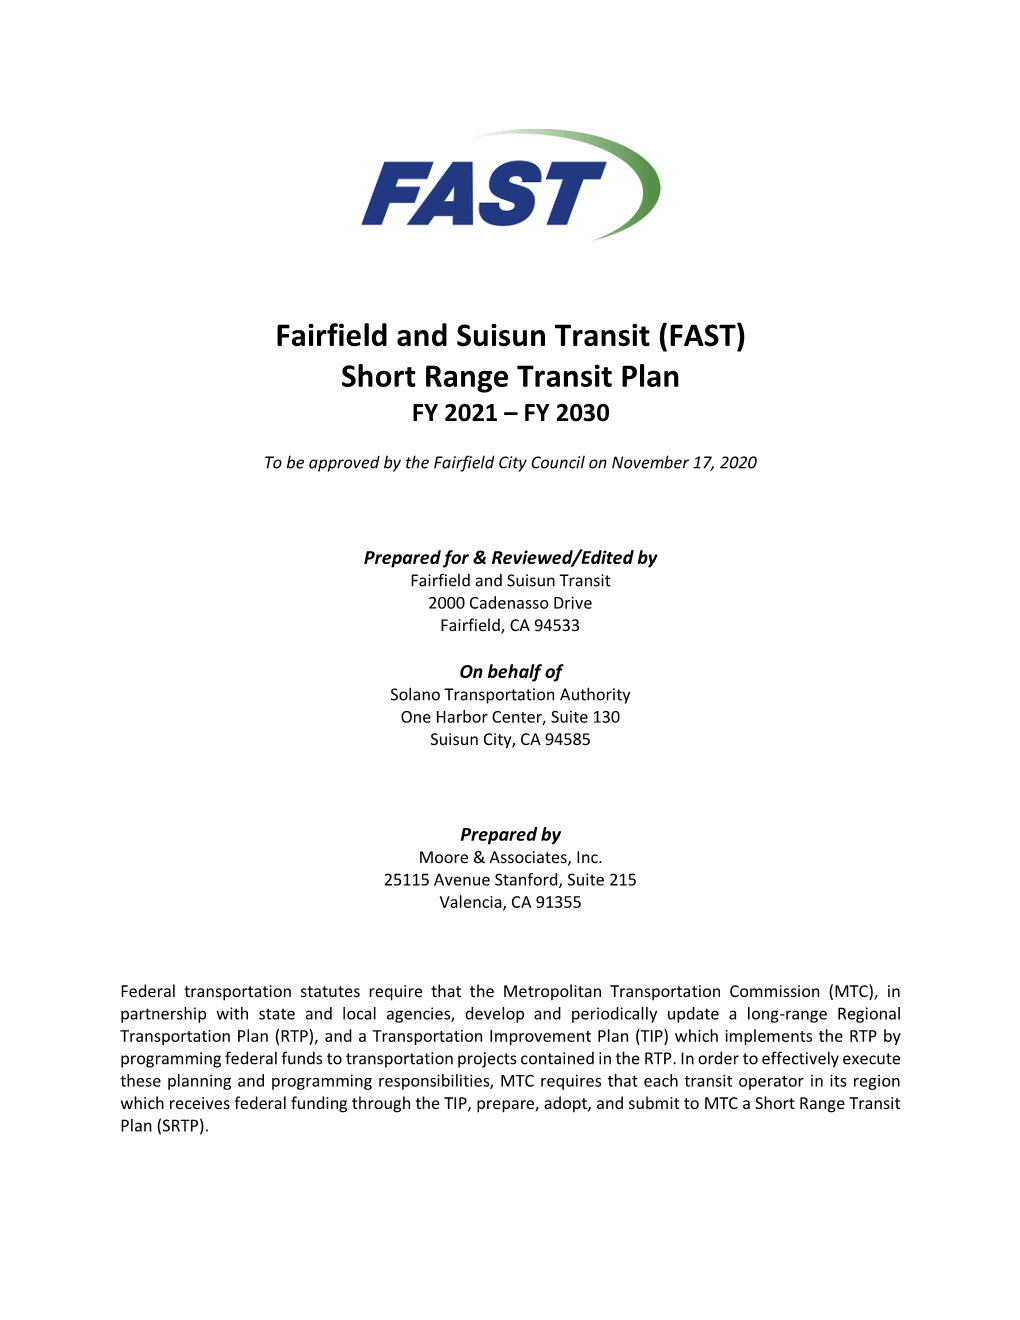 Fairfield and Suisun Transit (FAST) Short Range Transit Plan FY 2021 – FY 2030